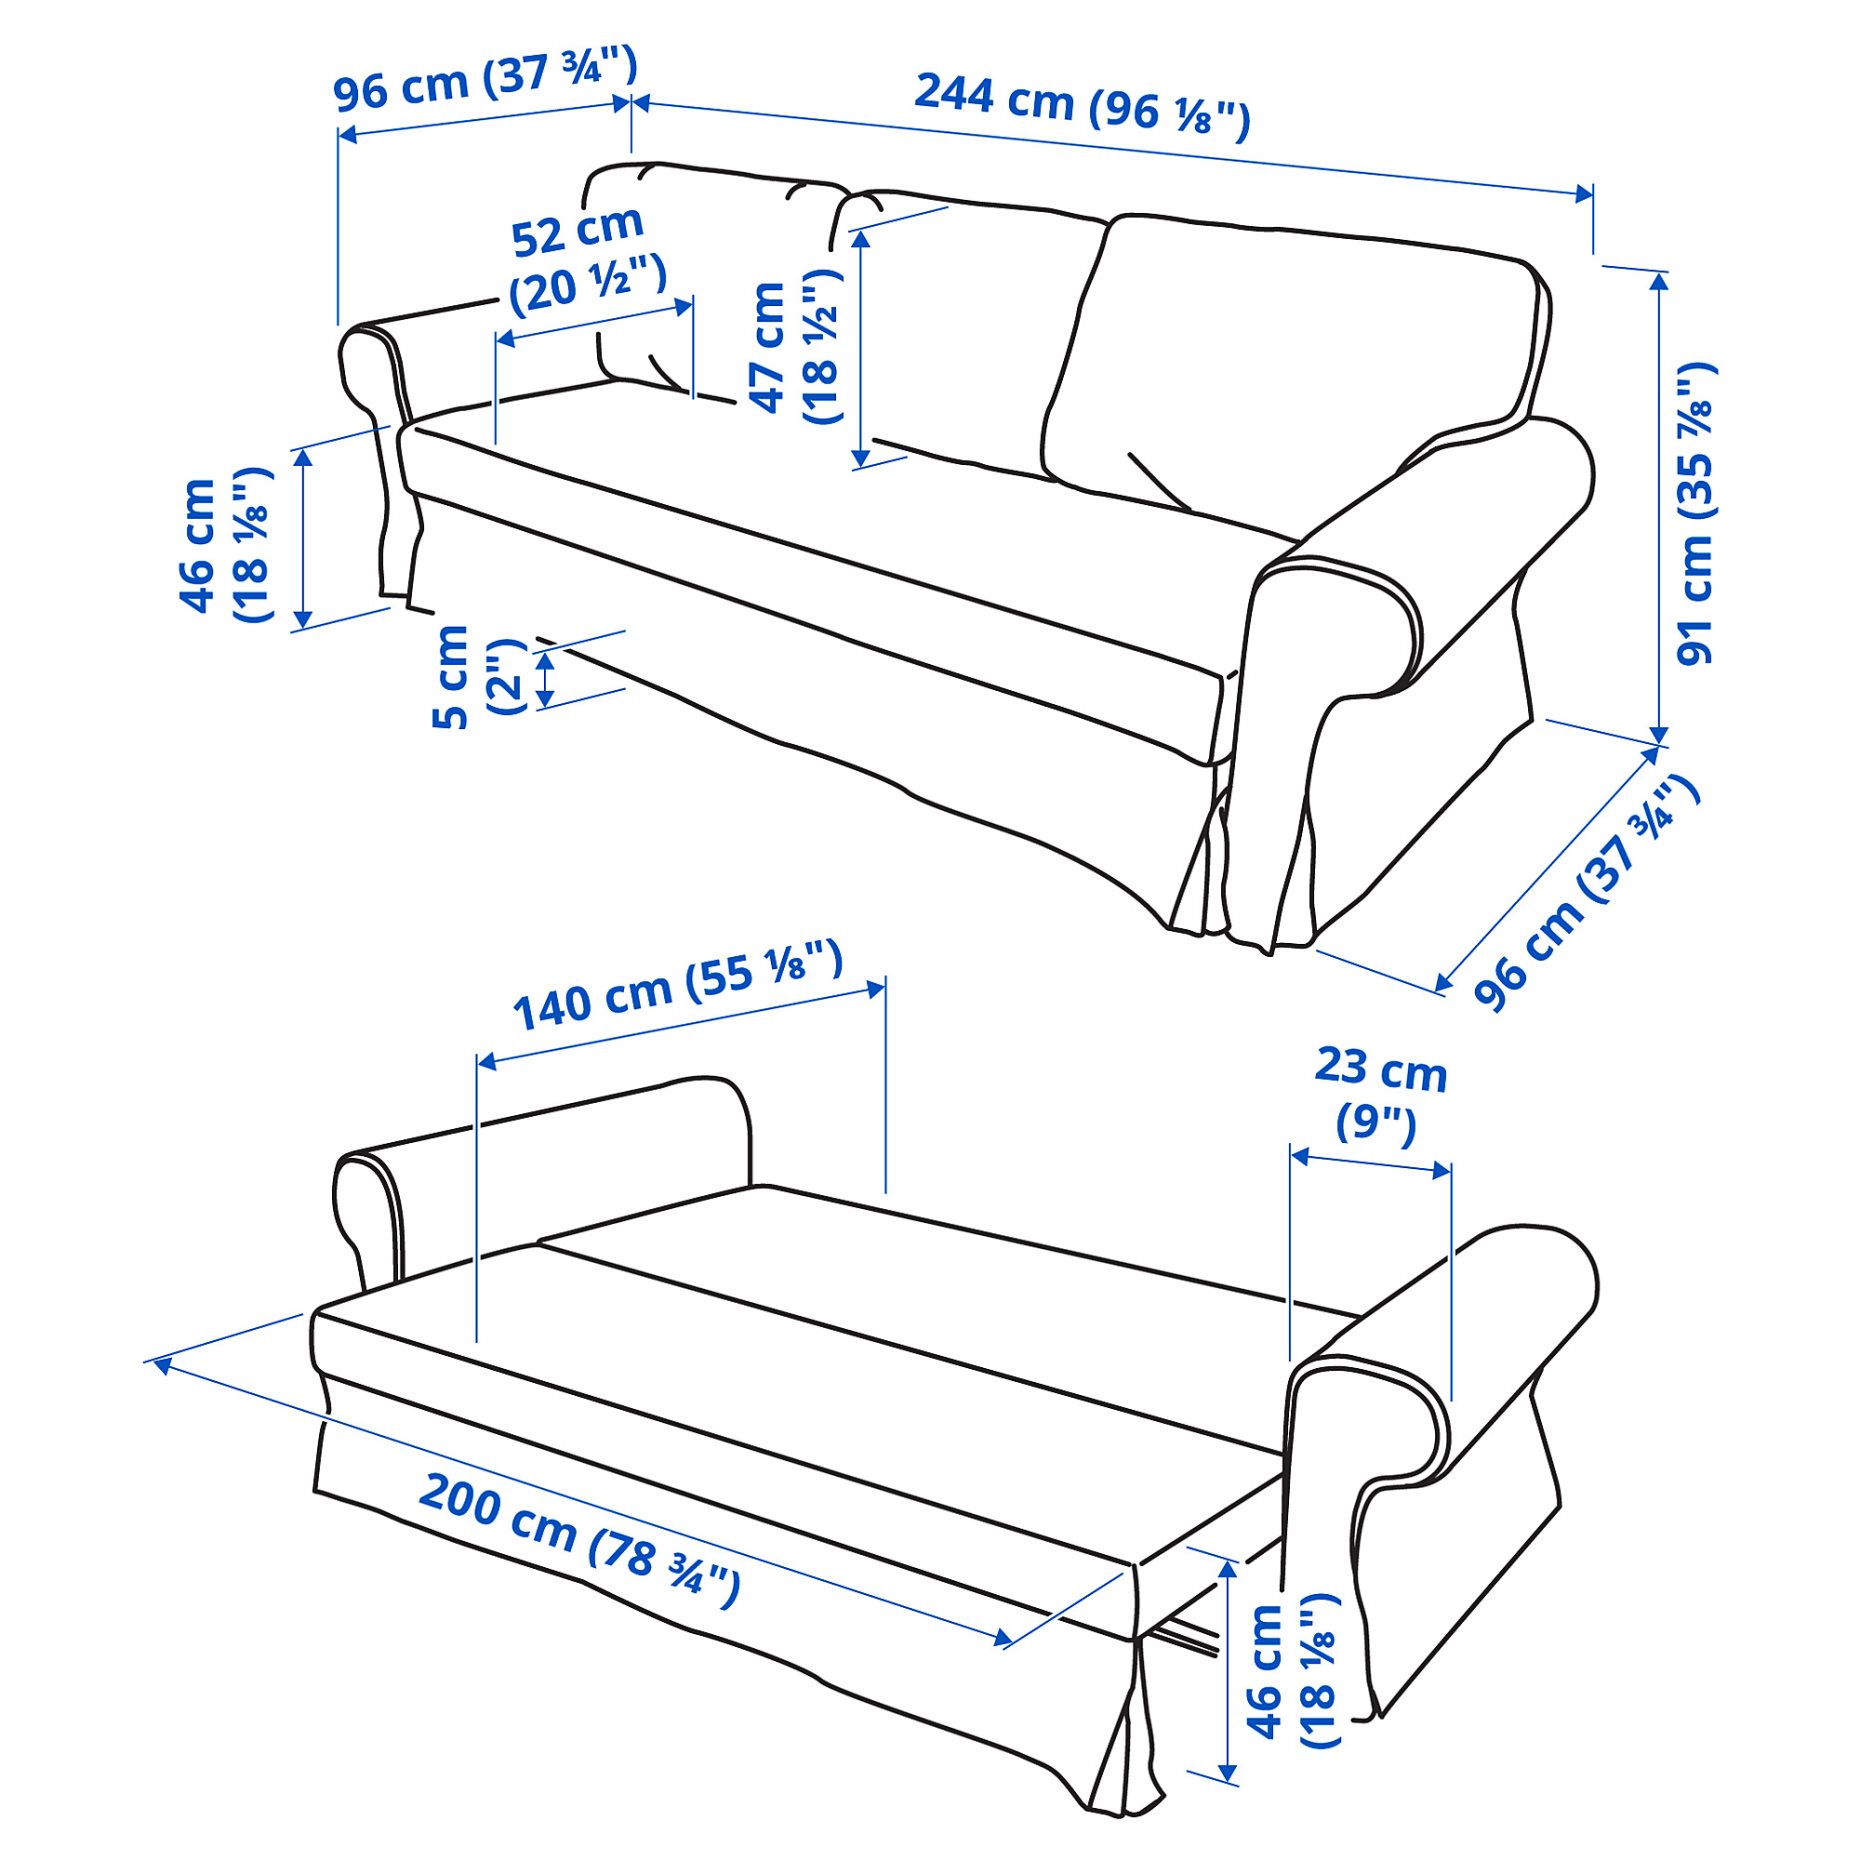 VRETSTORP, 3-seat sofa-bed, 393.201.28